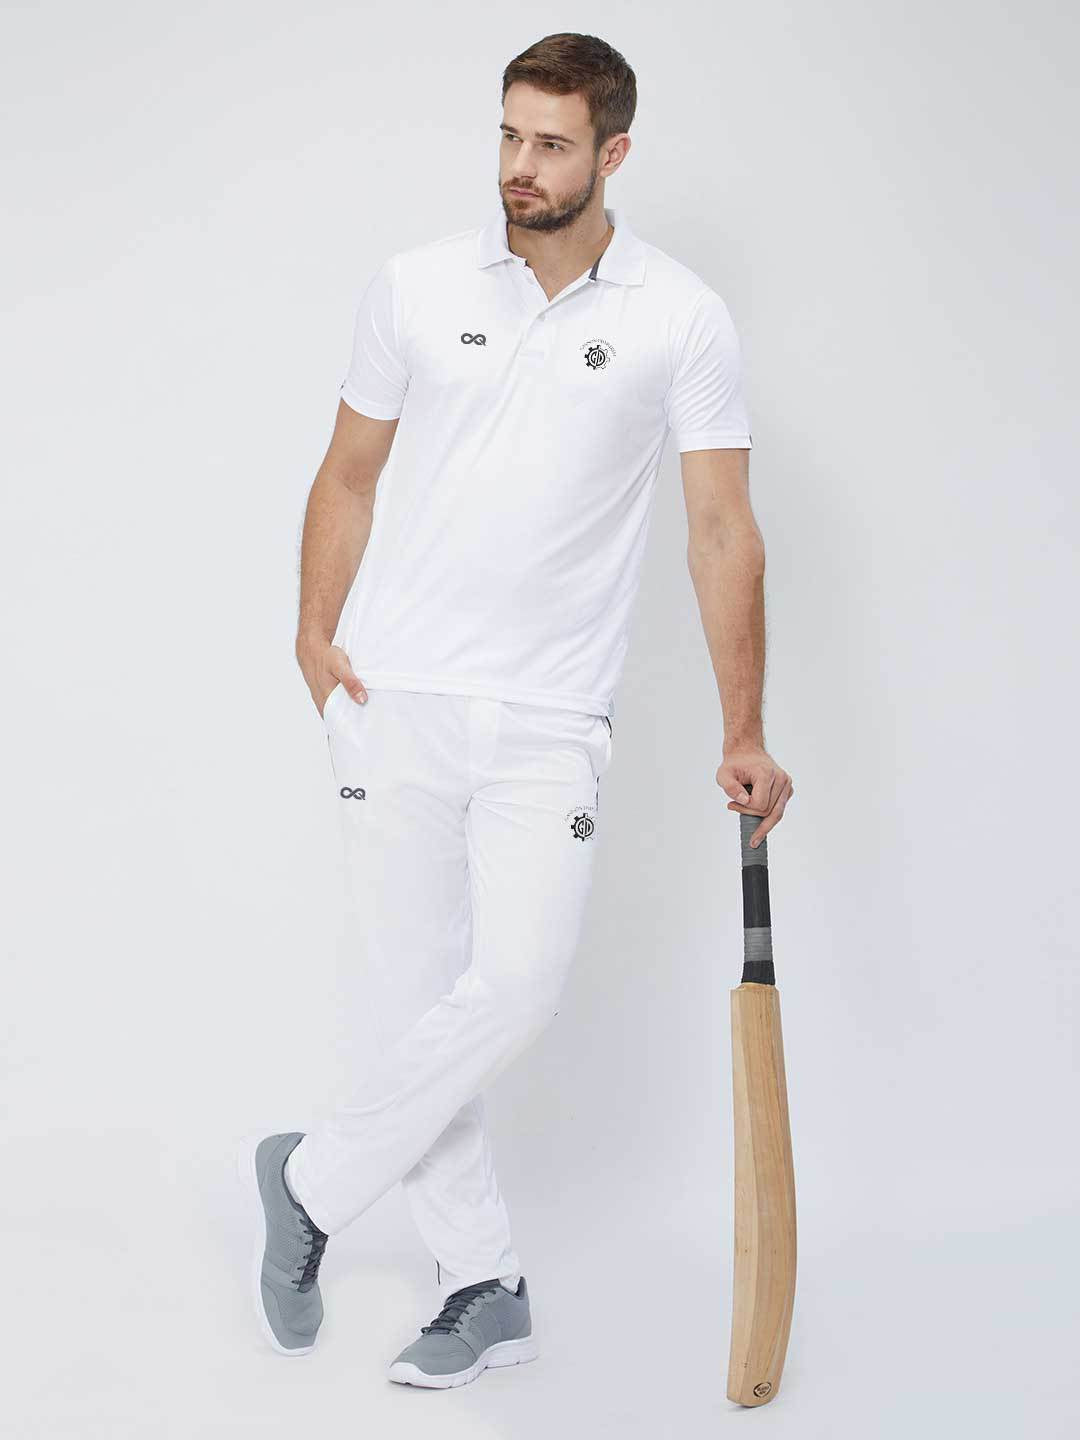 Gortonshire Premium Cricket Trouser Senior Sizes | Cricket Kit & Clothes |  Buy Online India | Price, Photos, Features & Details | Gortonshire Cricket  Shop India